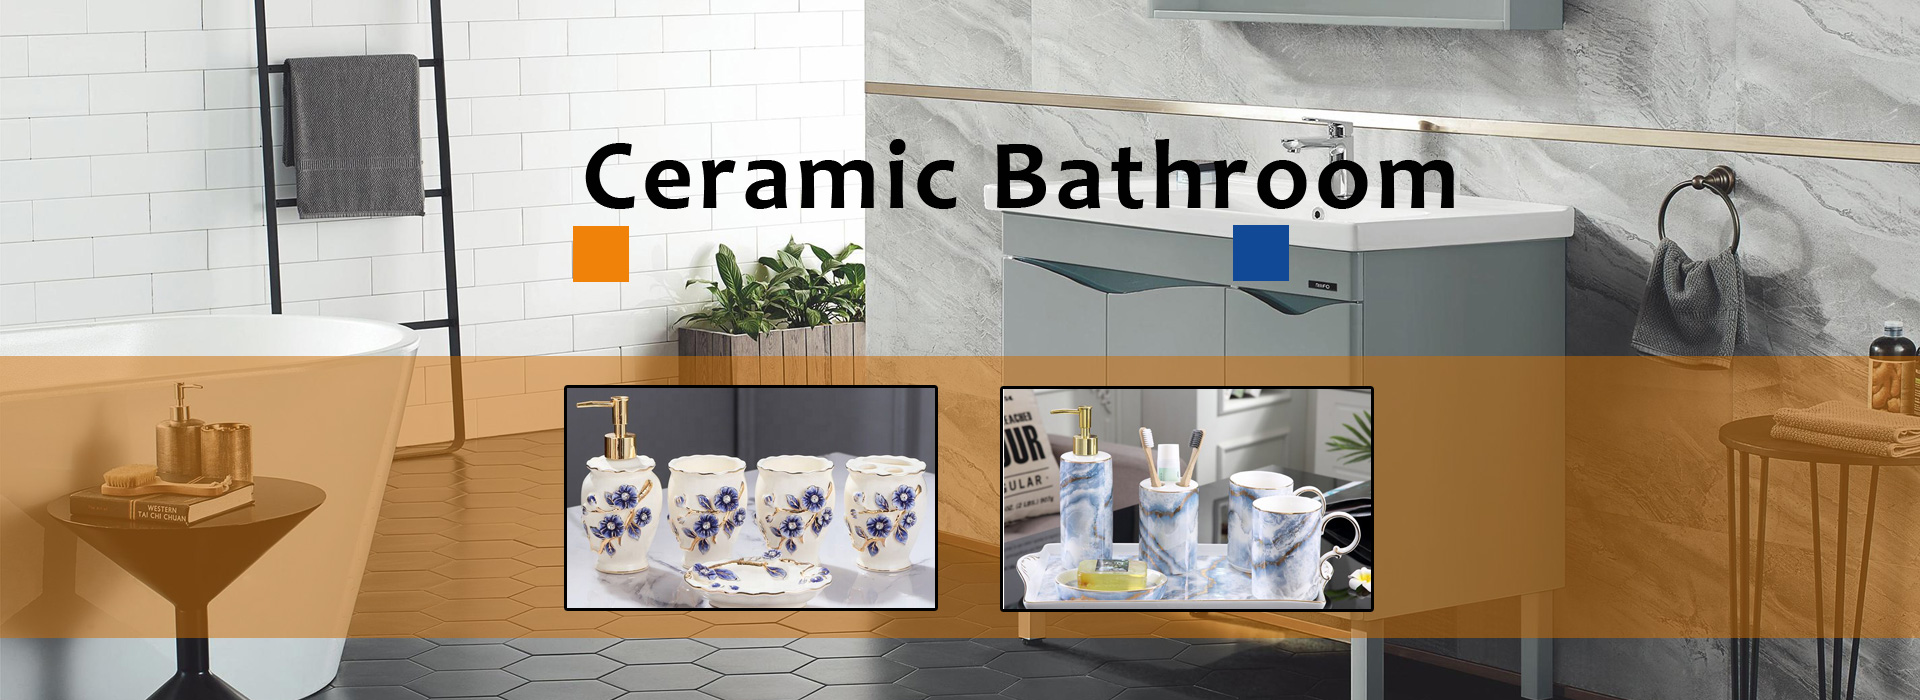 Ceramic bathroom 3 sets